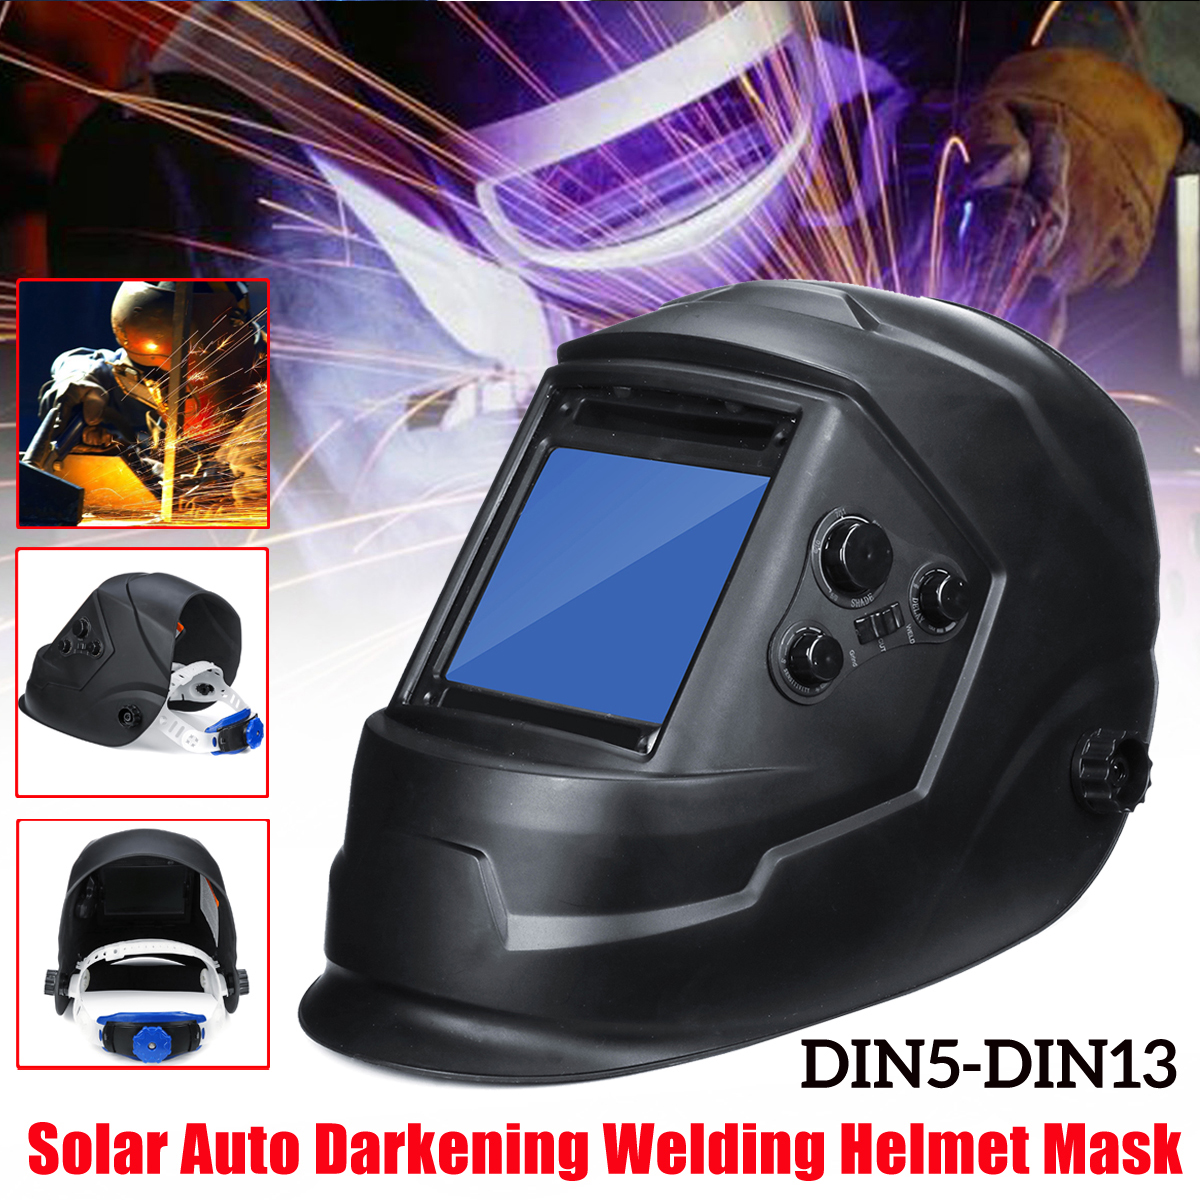 Solar-Energy-Automatic-Dimming-Welding-Mask-Auto-Darkening-Welding-Helmet-Big-View-Area-4-Sensors-Ex-1534647-1